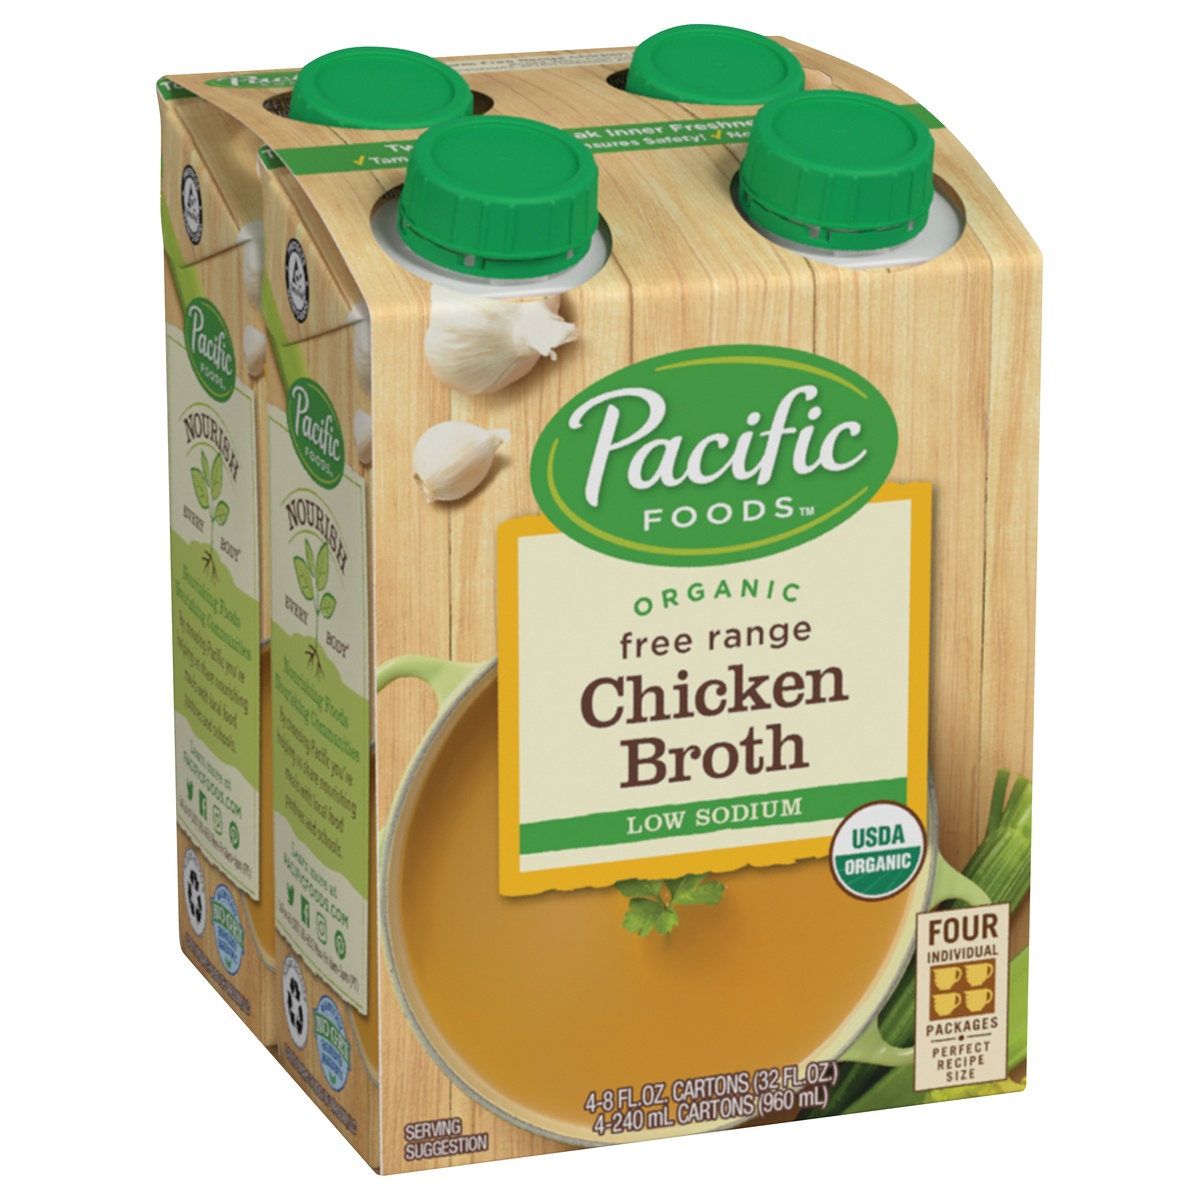 Pacific Organic Free Range Low Sodium Chicken Broth 4 ct | Shipt